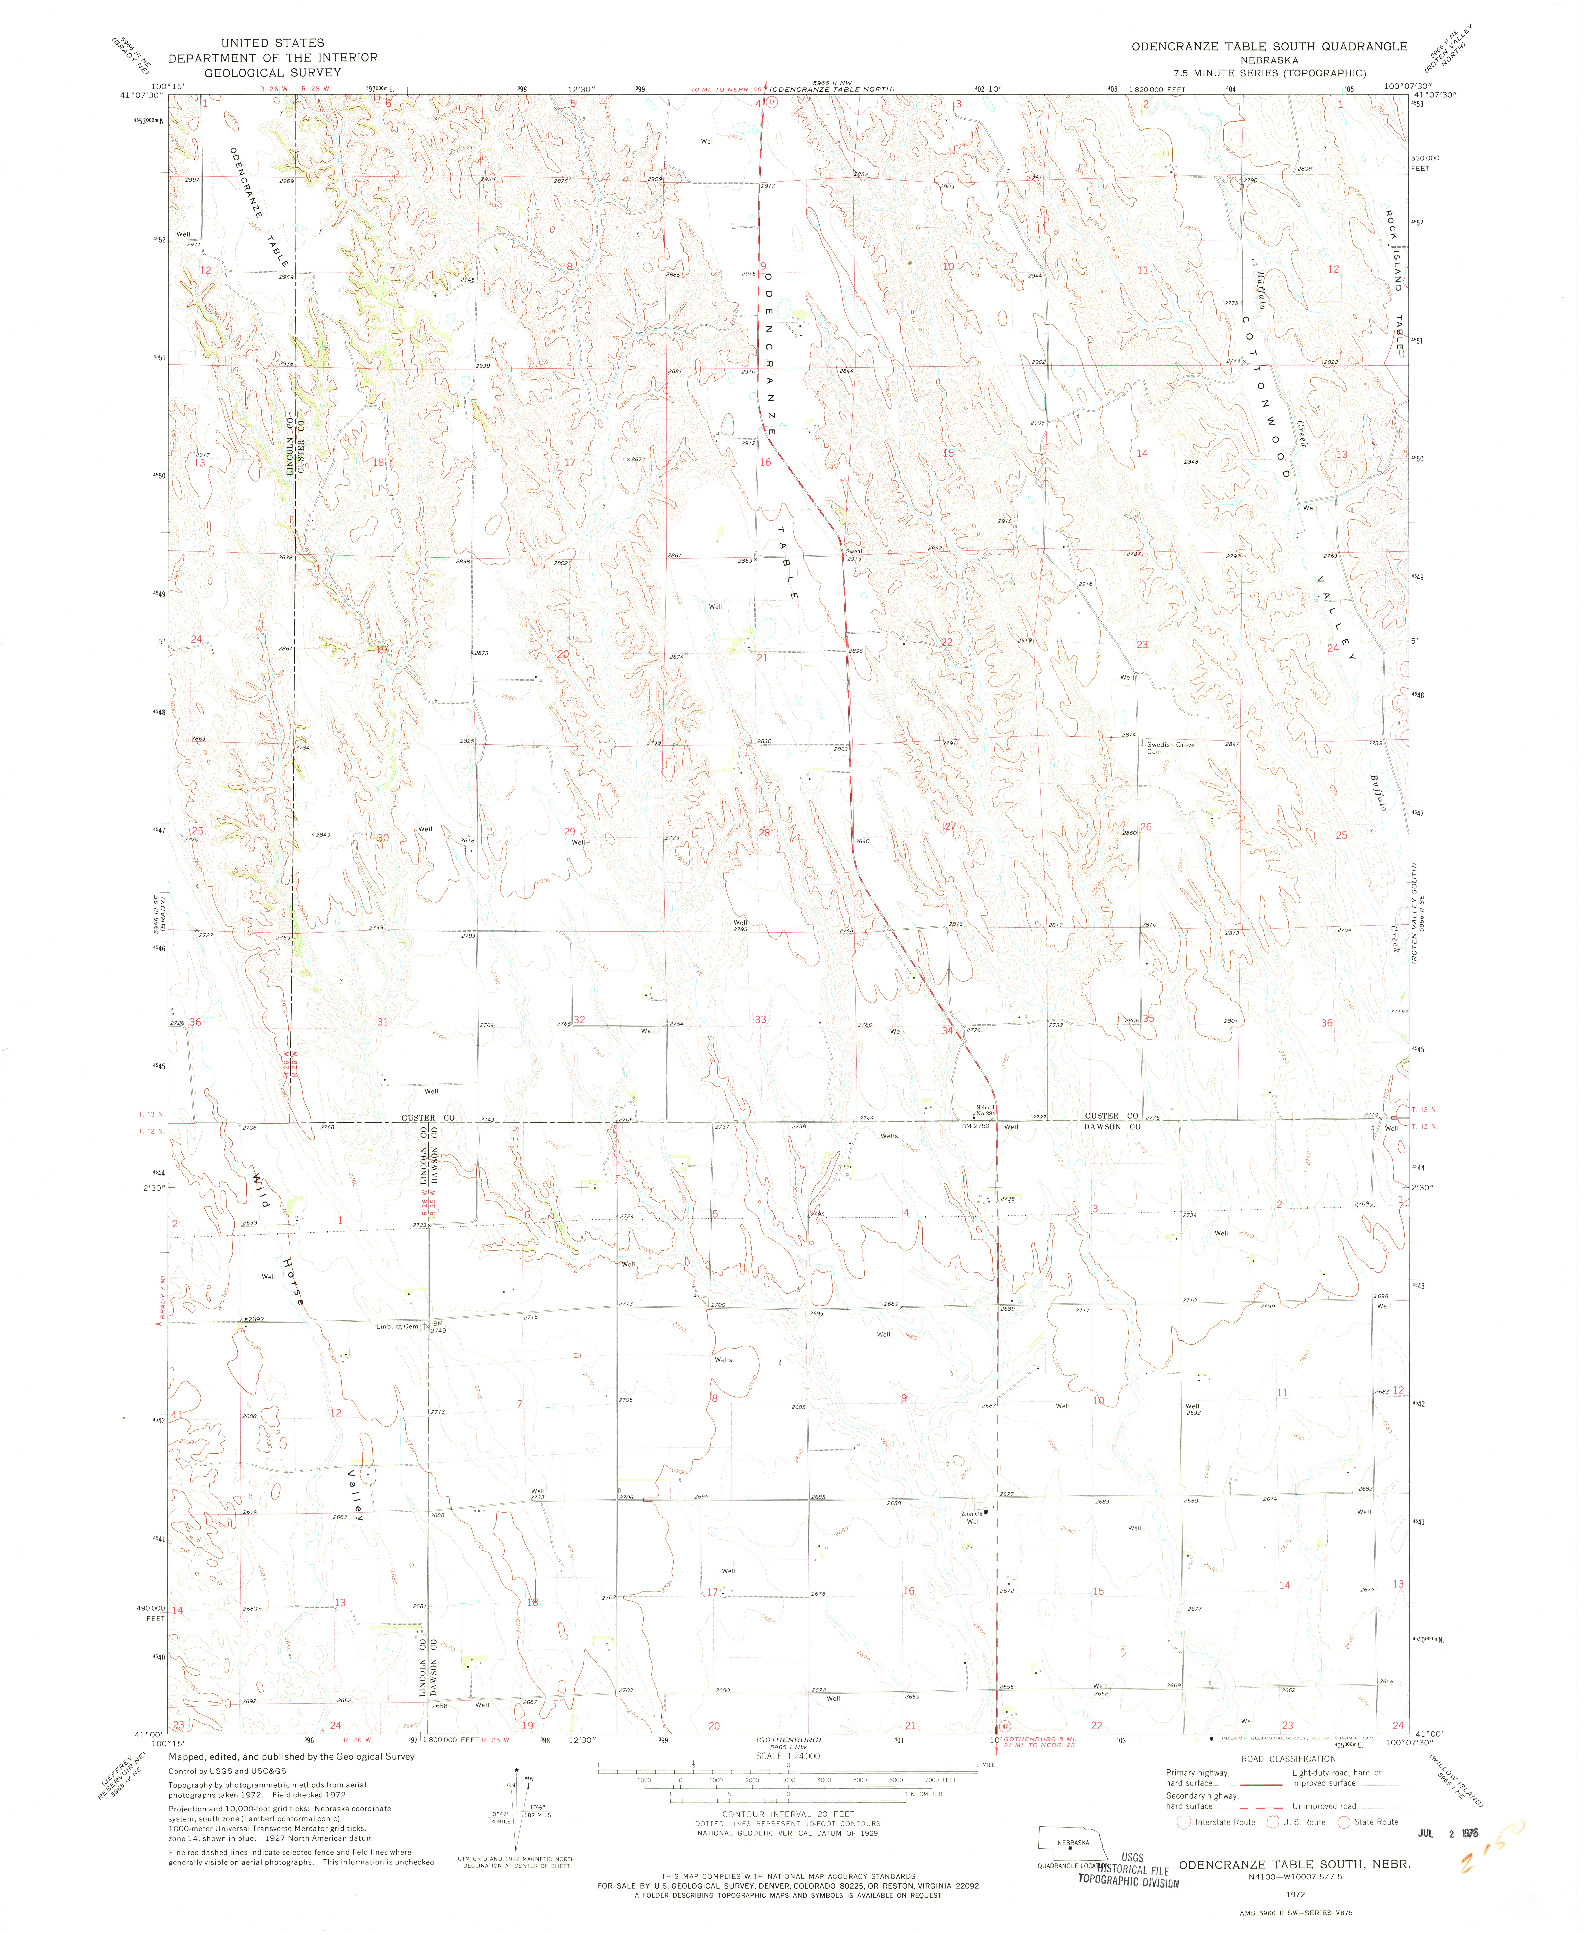 USGS 1:24000-SCALE QUADRANGLE FOR ODENCRANZE TABLE SOUTH, NE 1972